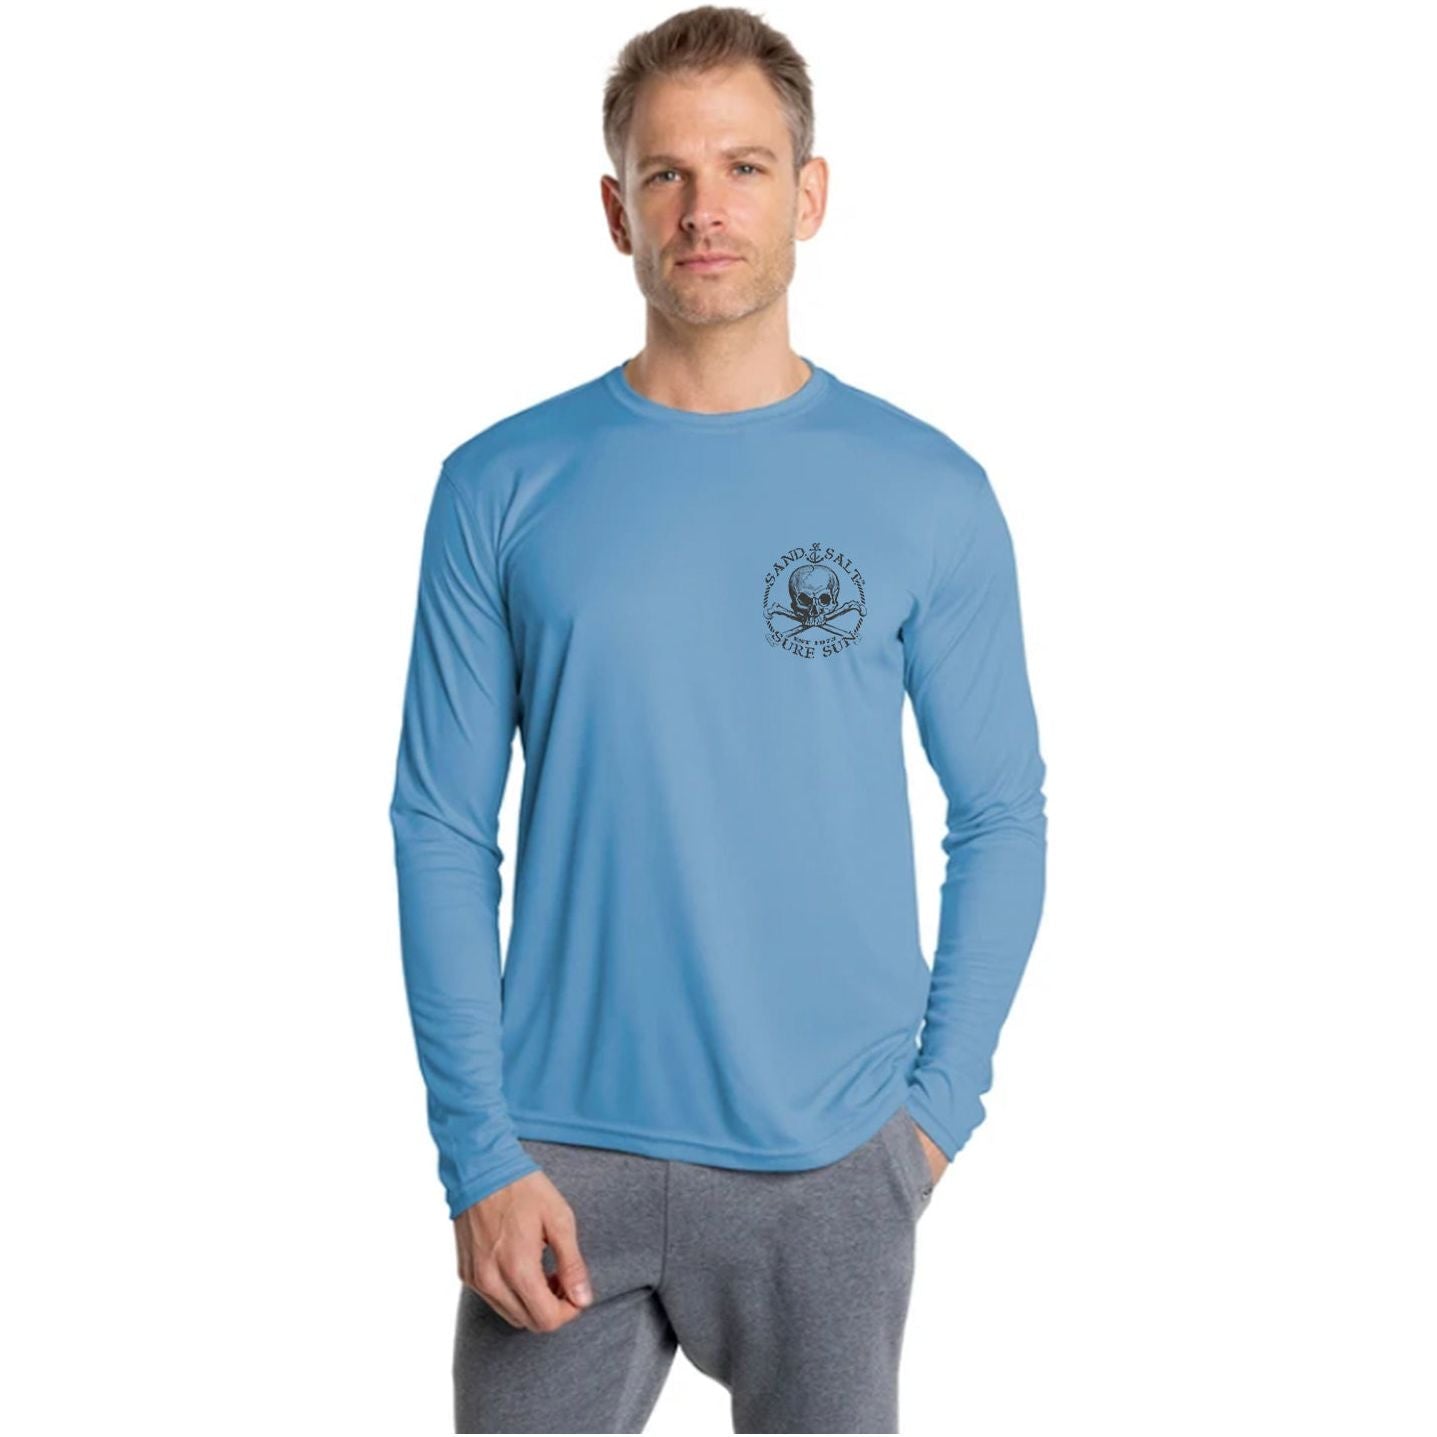 SAND.SALT.SURF.SUN. Marlin Men's UPF 50+ UV Sun Protection Performance Long Sleeve T-Shirt Large / Columbia Blue